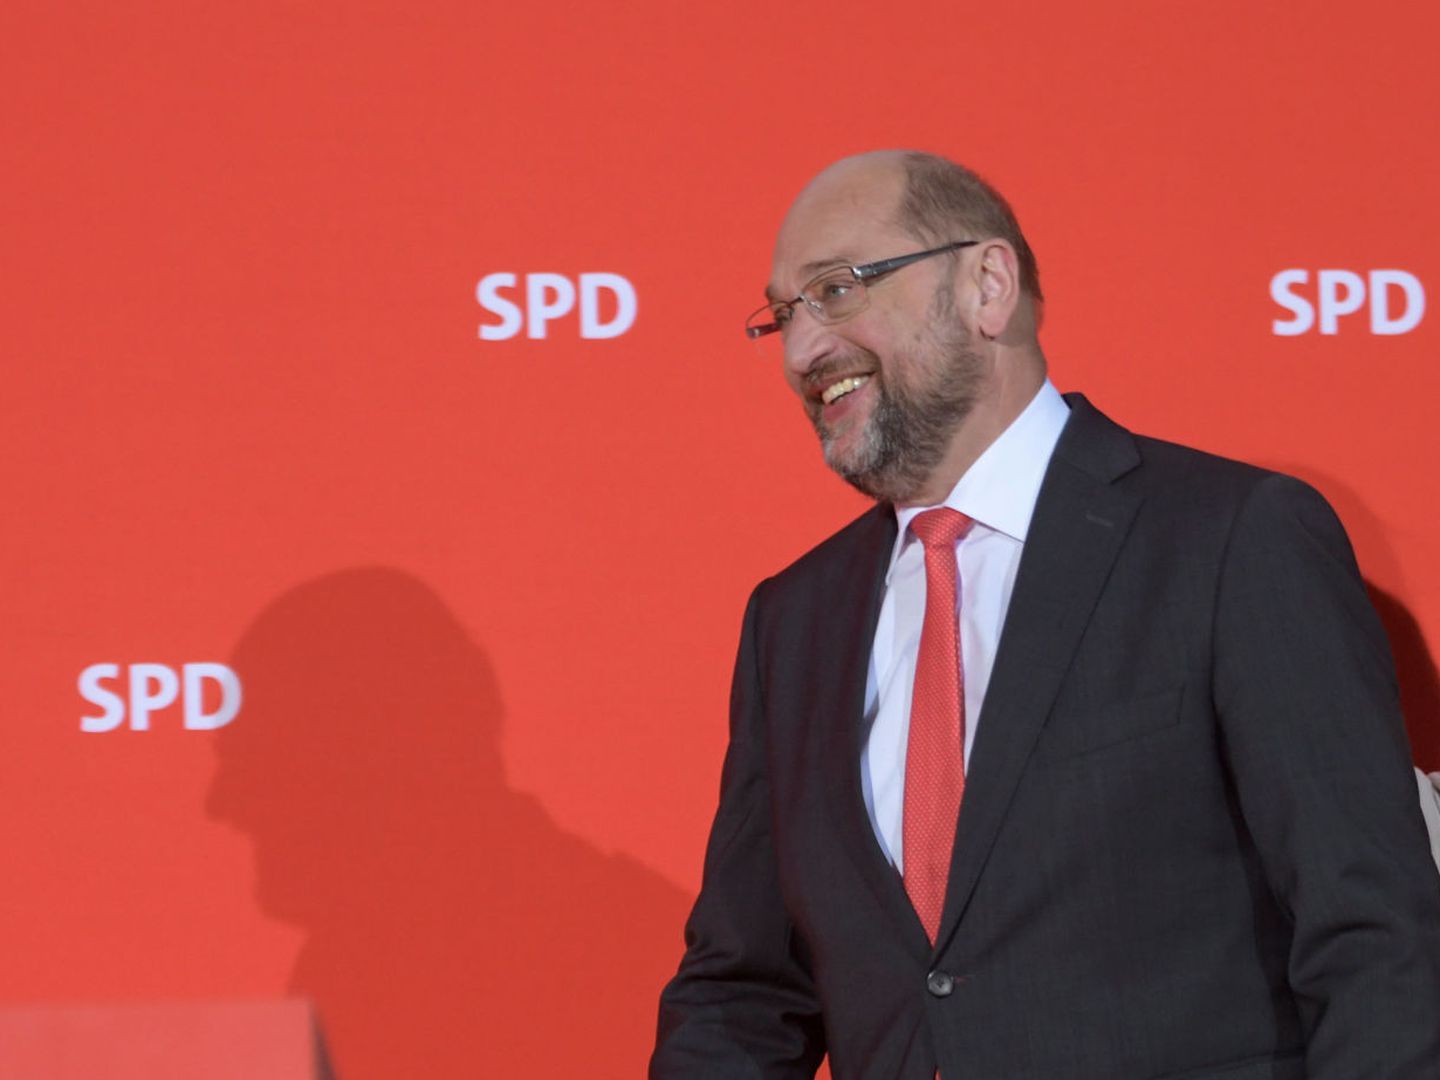 El líder del partido Socialdemócrata, Martin Schulz. (EFE)